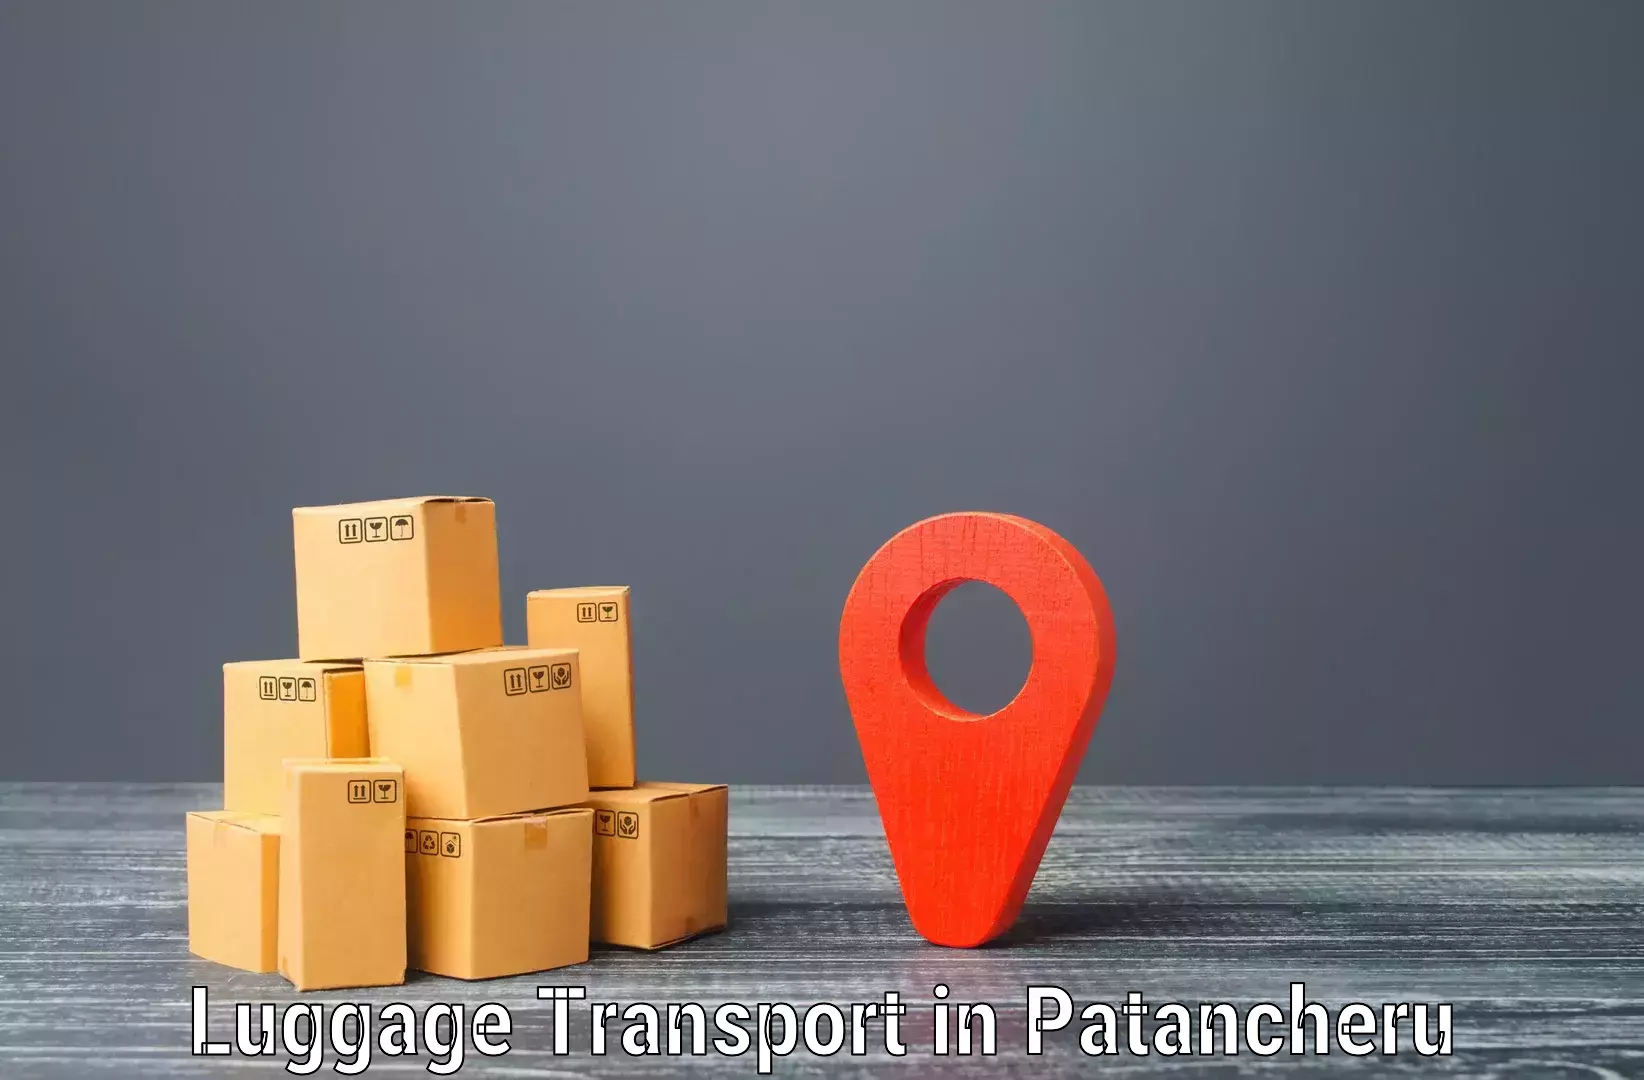 Baggage transport technology in Patancheru